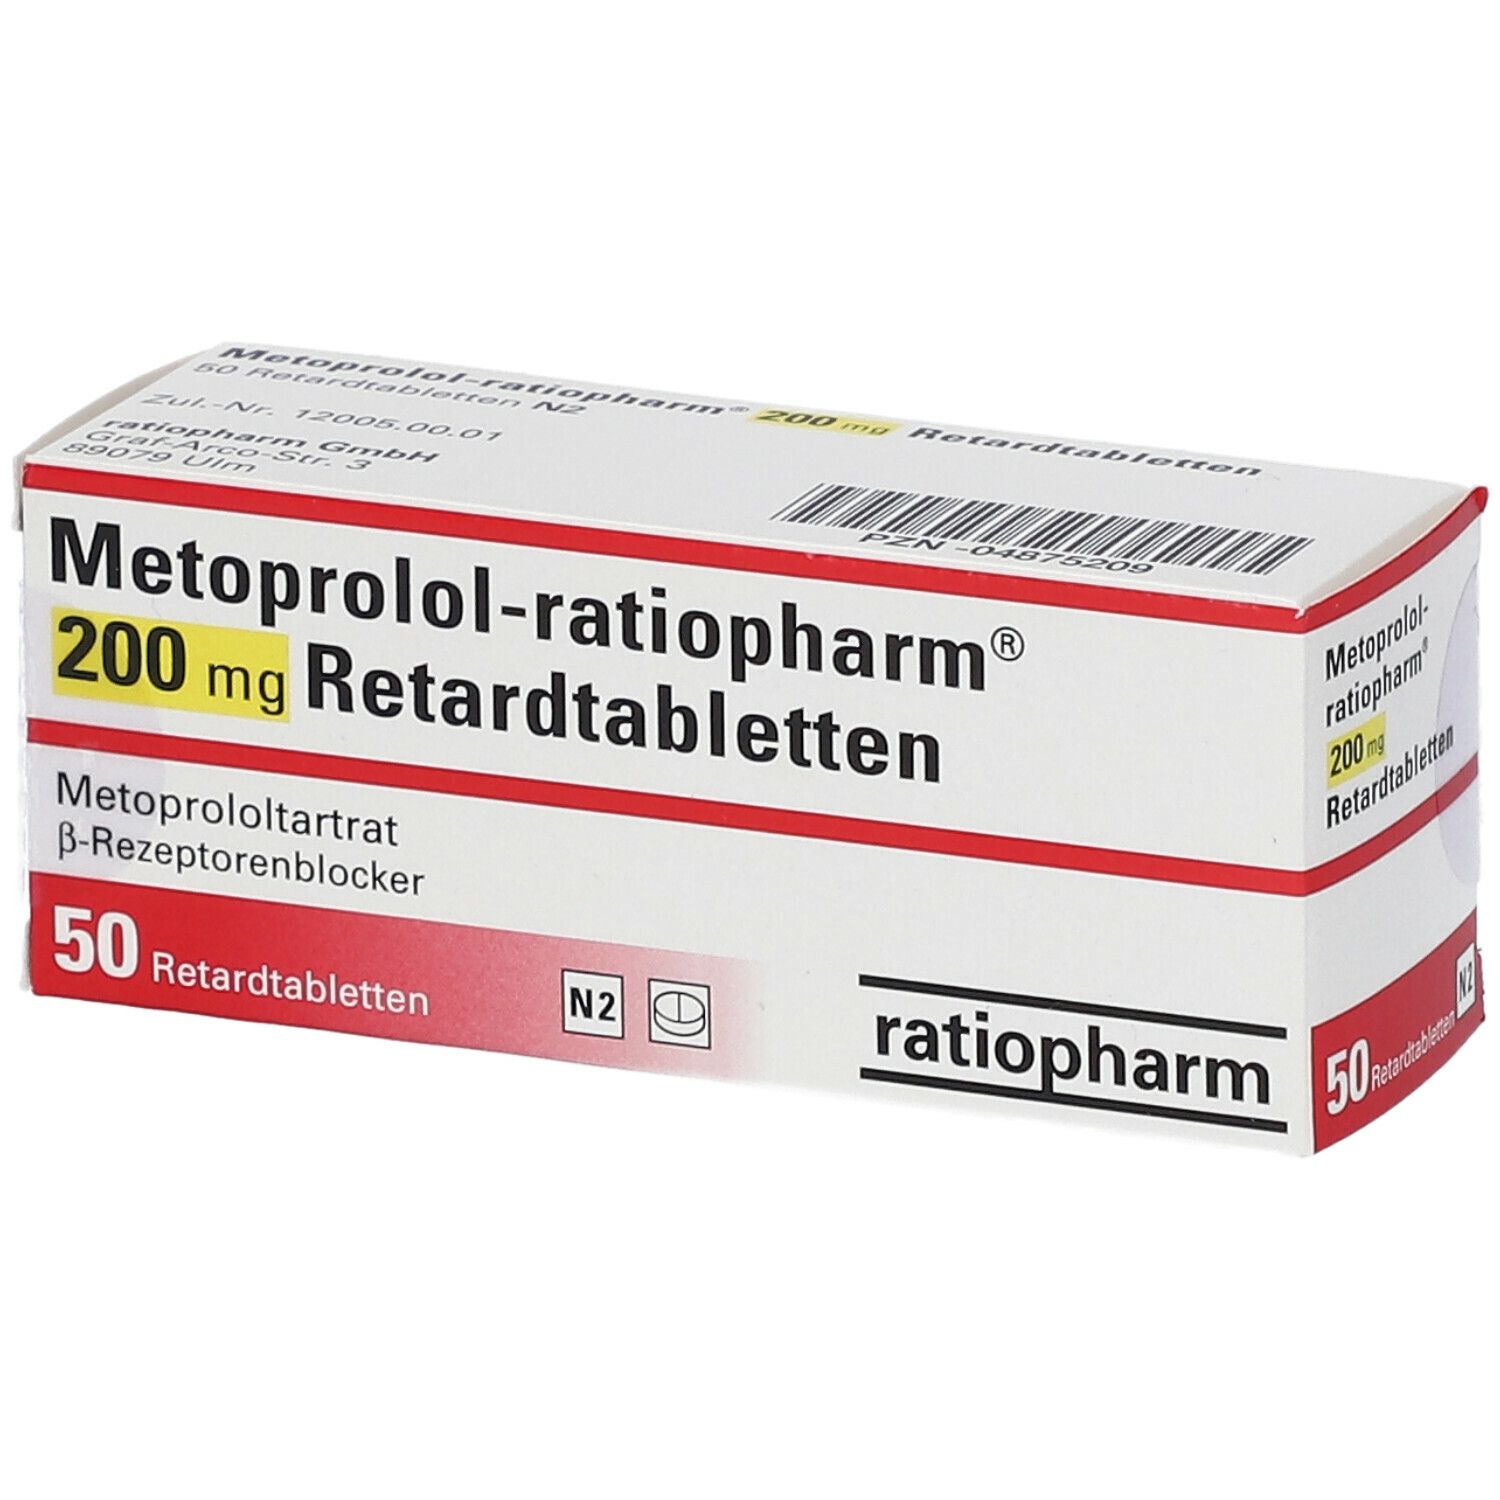 Metoprolol-ratiopharm® 200 mg